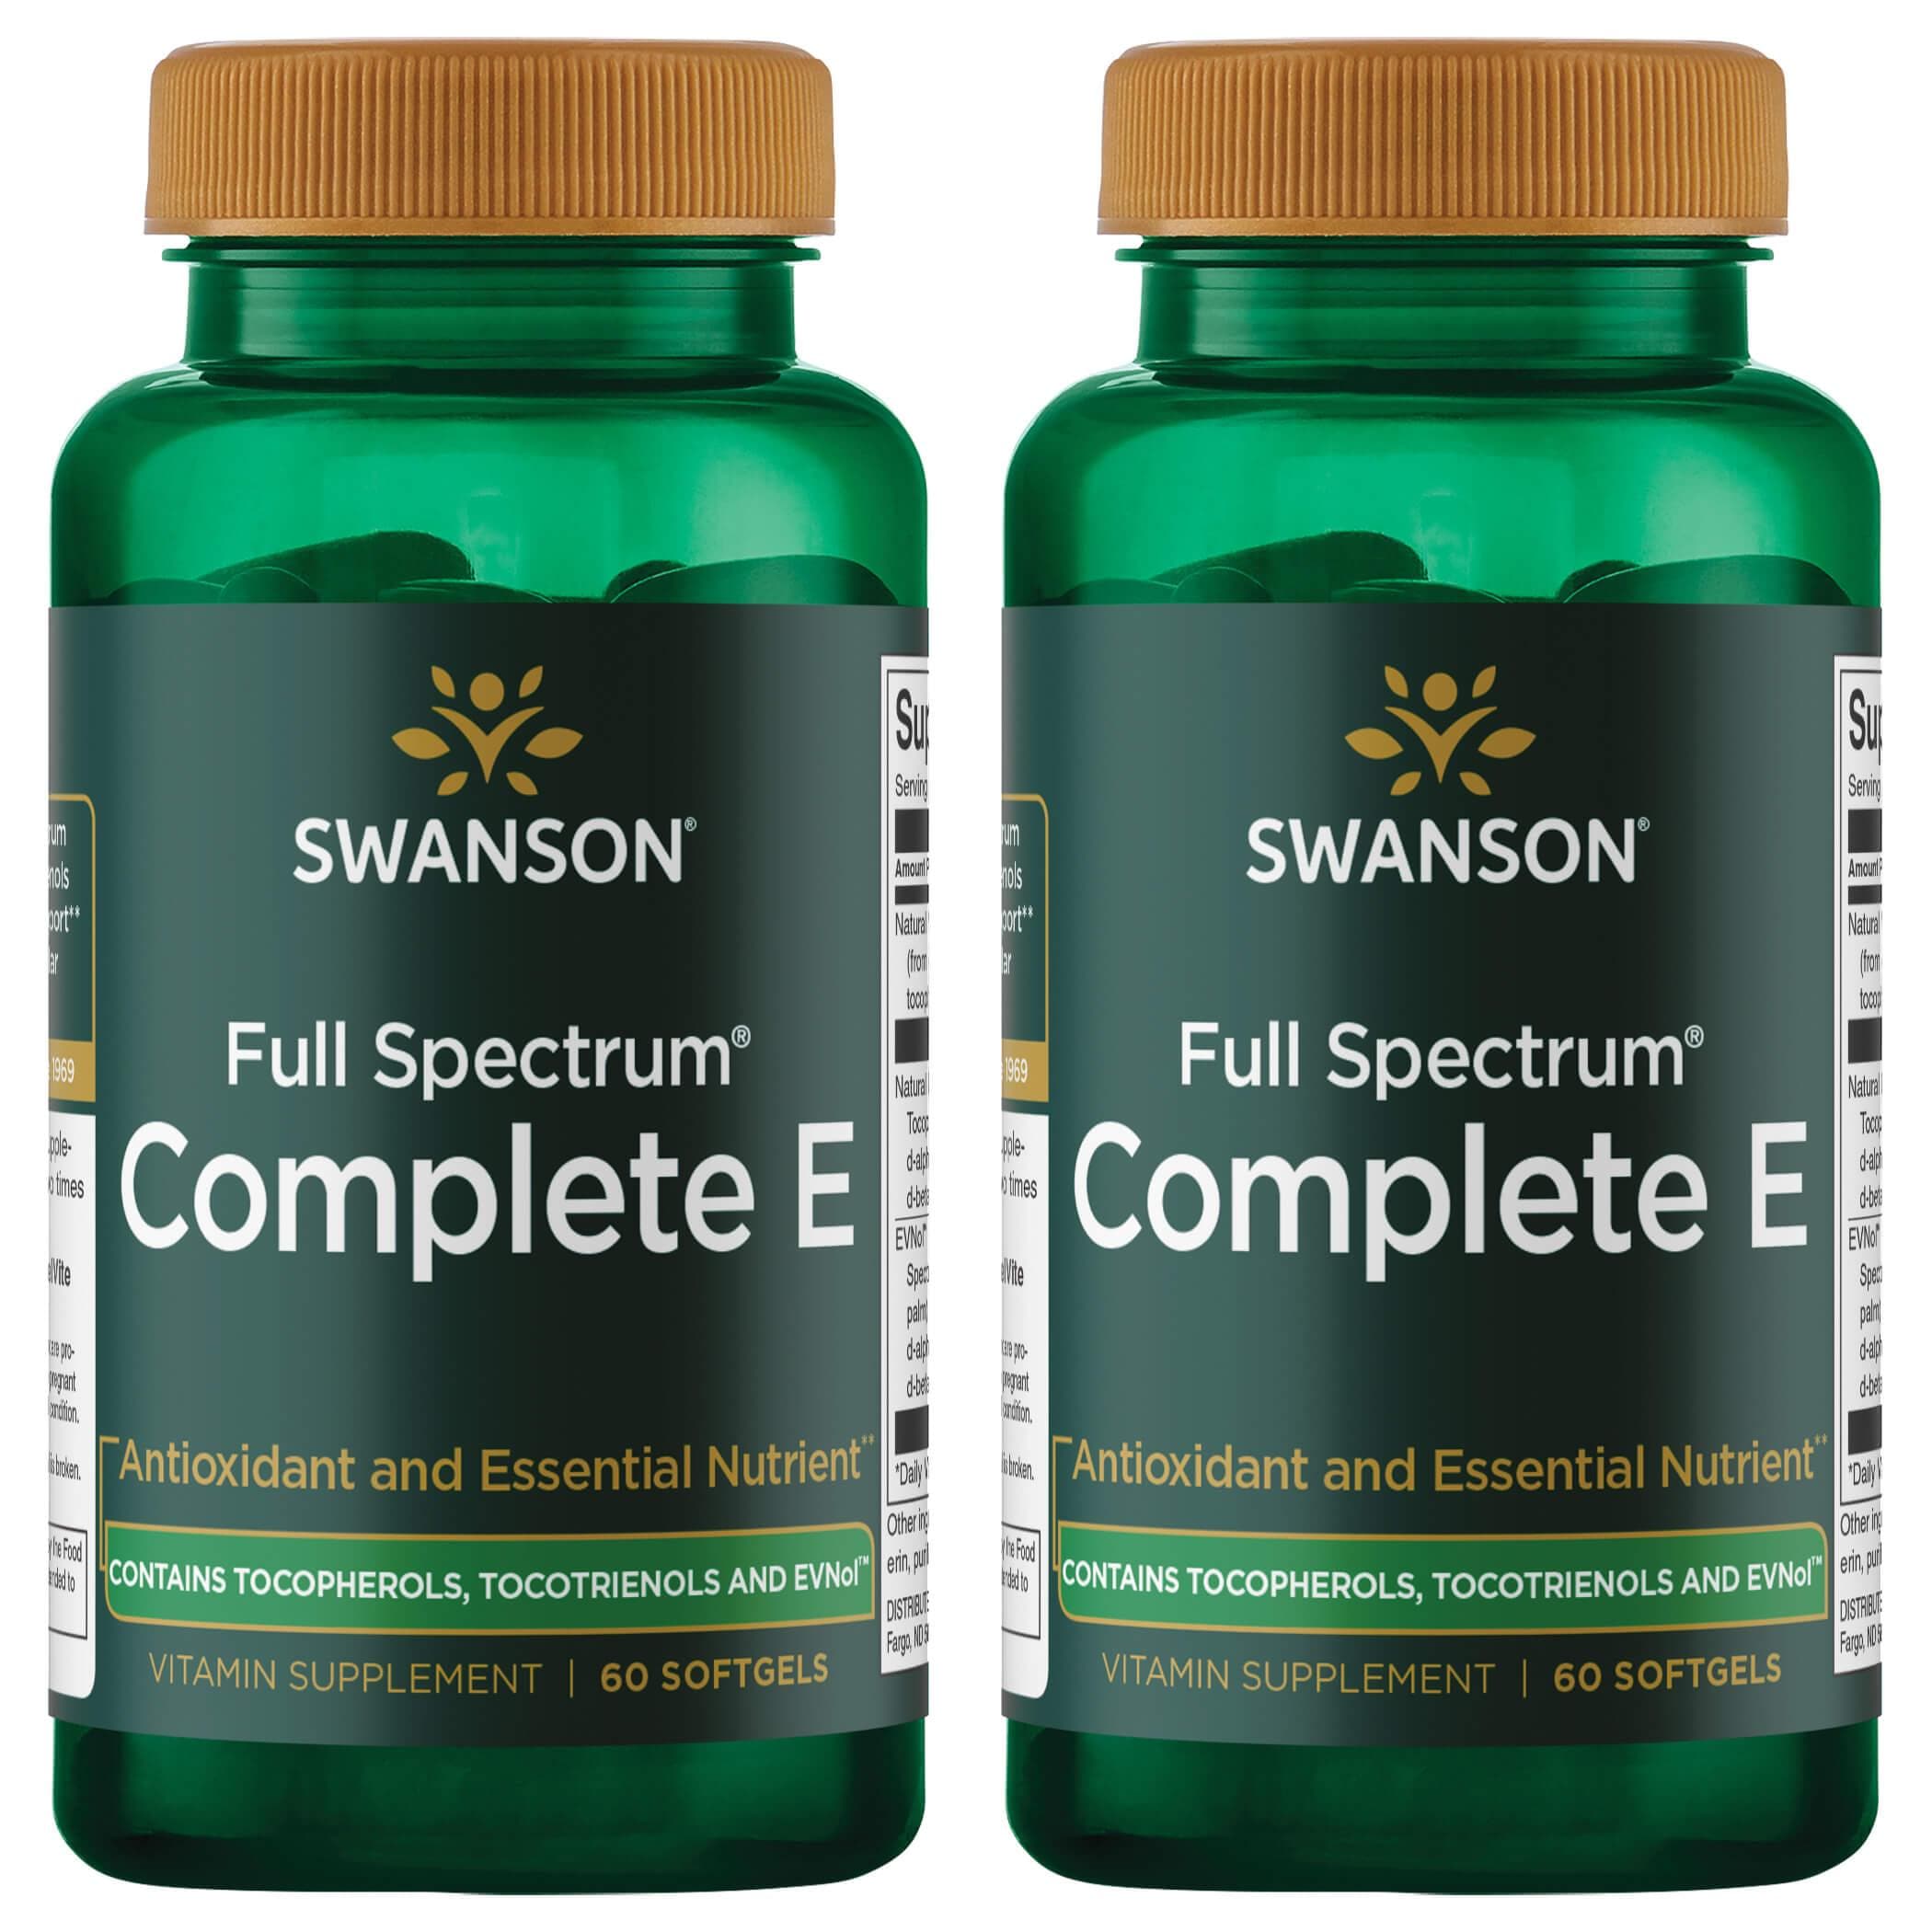 Swanson Ultra Full Spectrum Complete E Contain Tocopherols, Tocotrienols & Envol 2 Pack Vitamin 60 Soft Gels Vitamin E